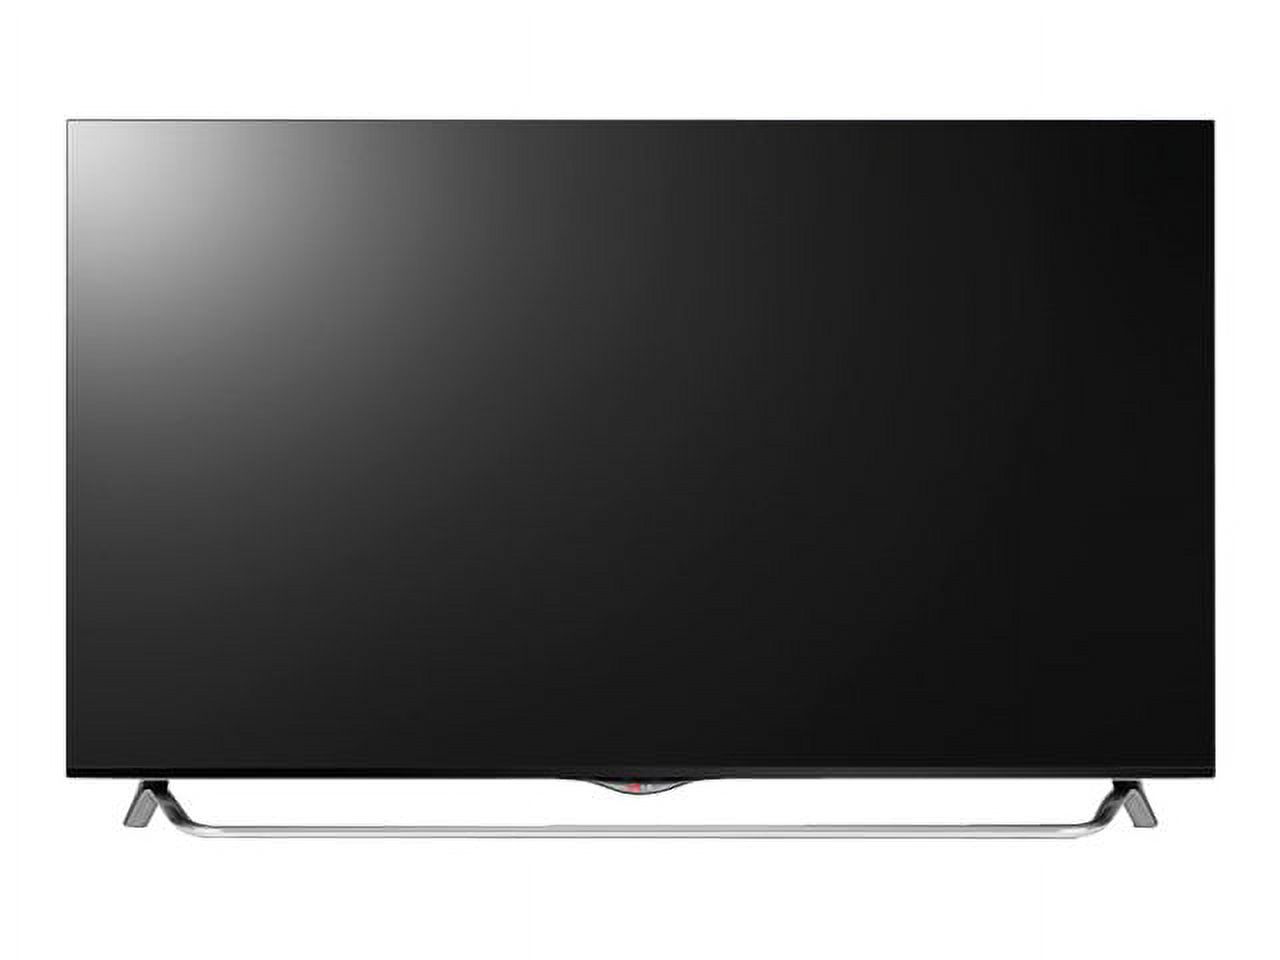 LG 55" Class 4K UHDTV (2160p) Smart LED-LCD TV (55UB8500) - image 1 of 2